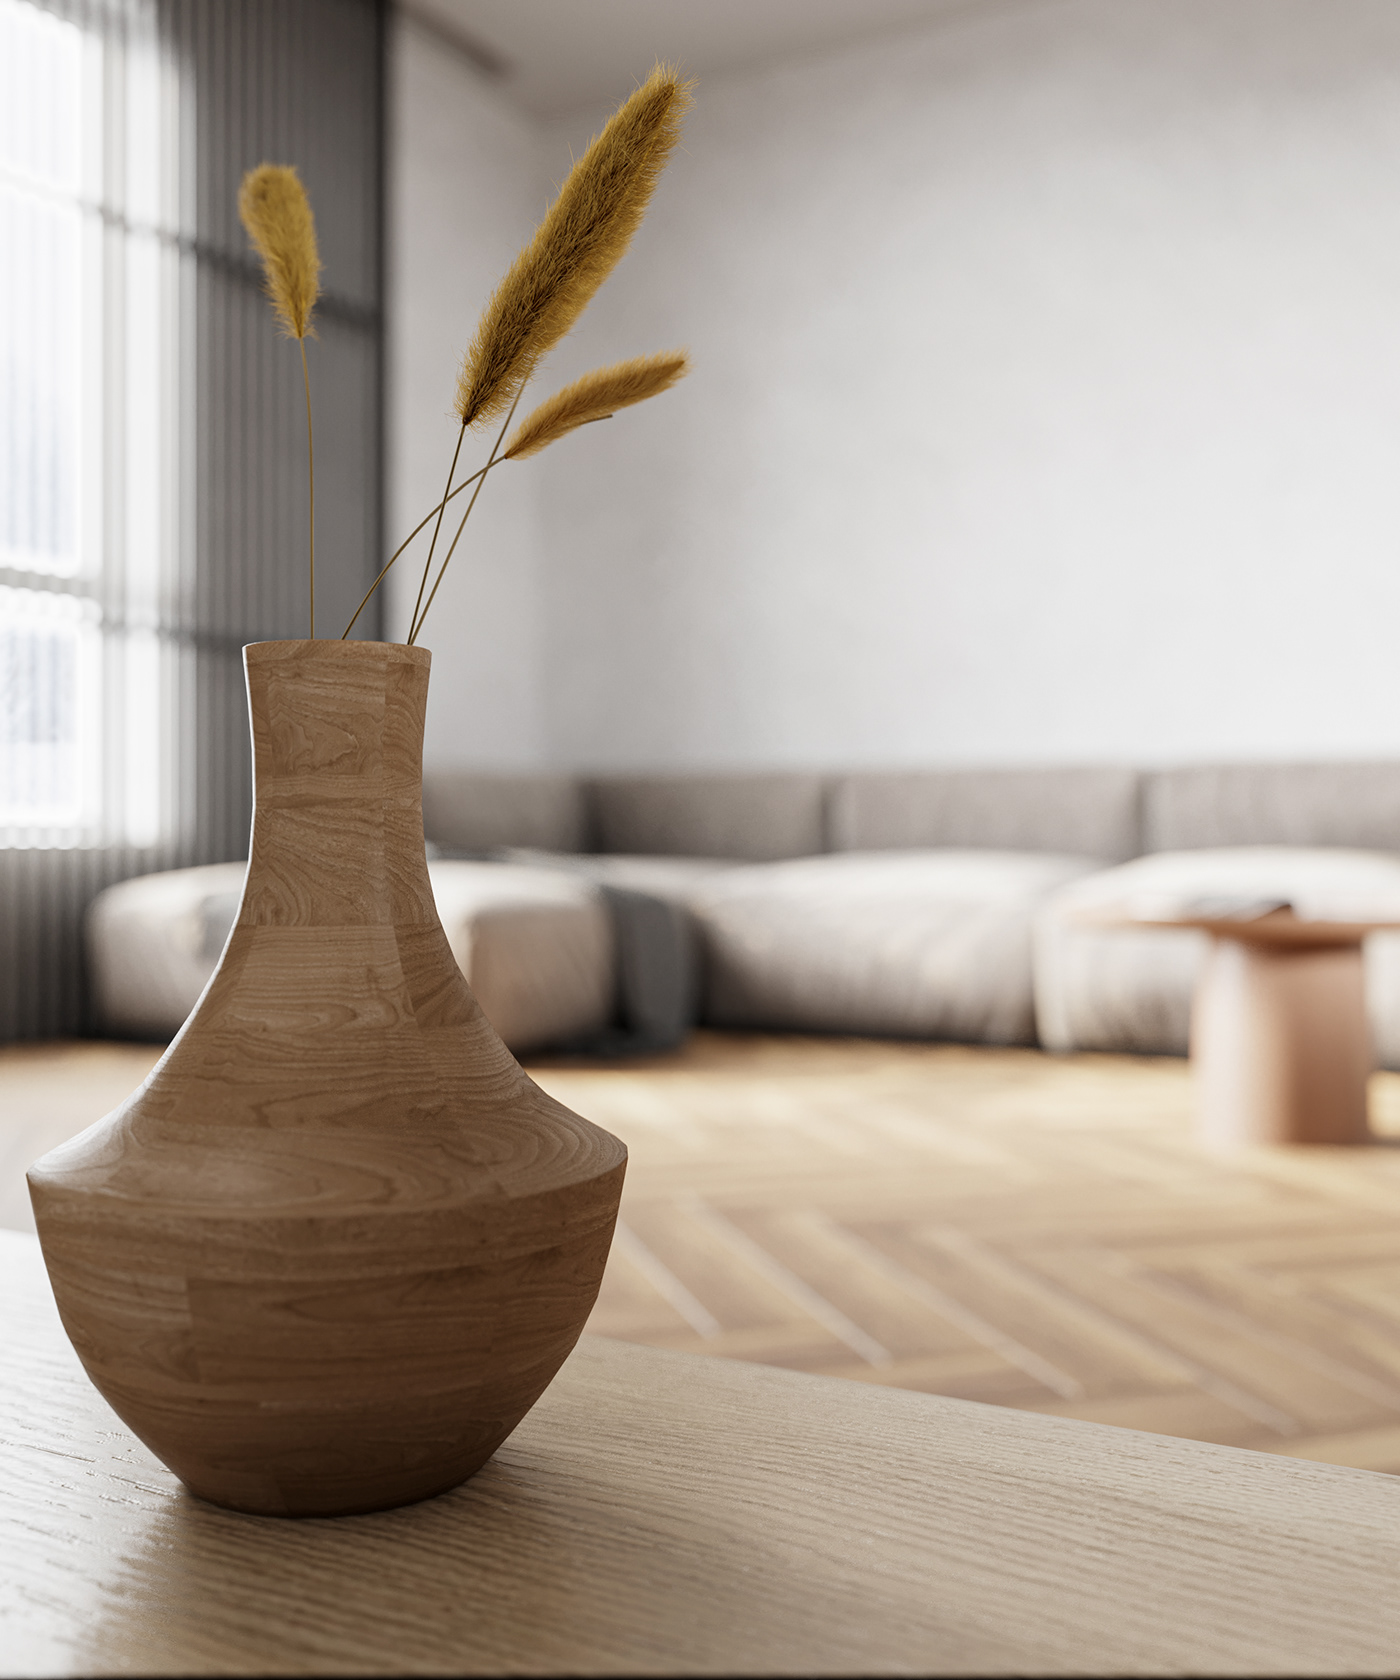 3D 3ds max CGI design Interior interior design  kitchen living room Render Vizualization